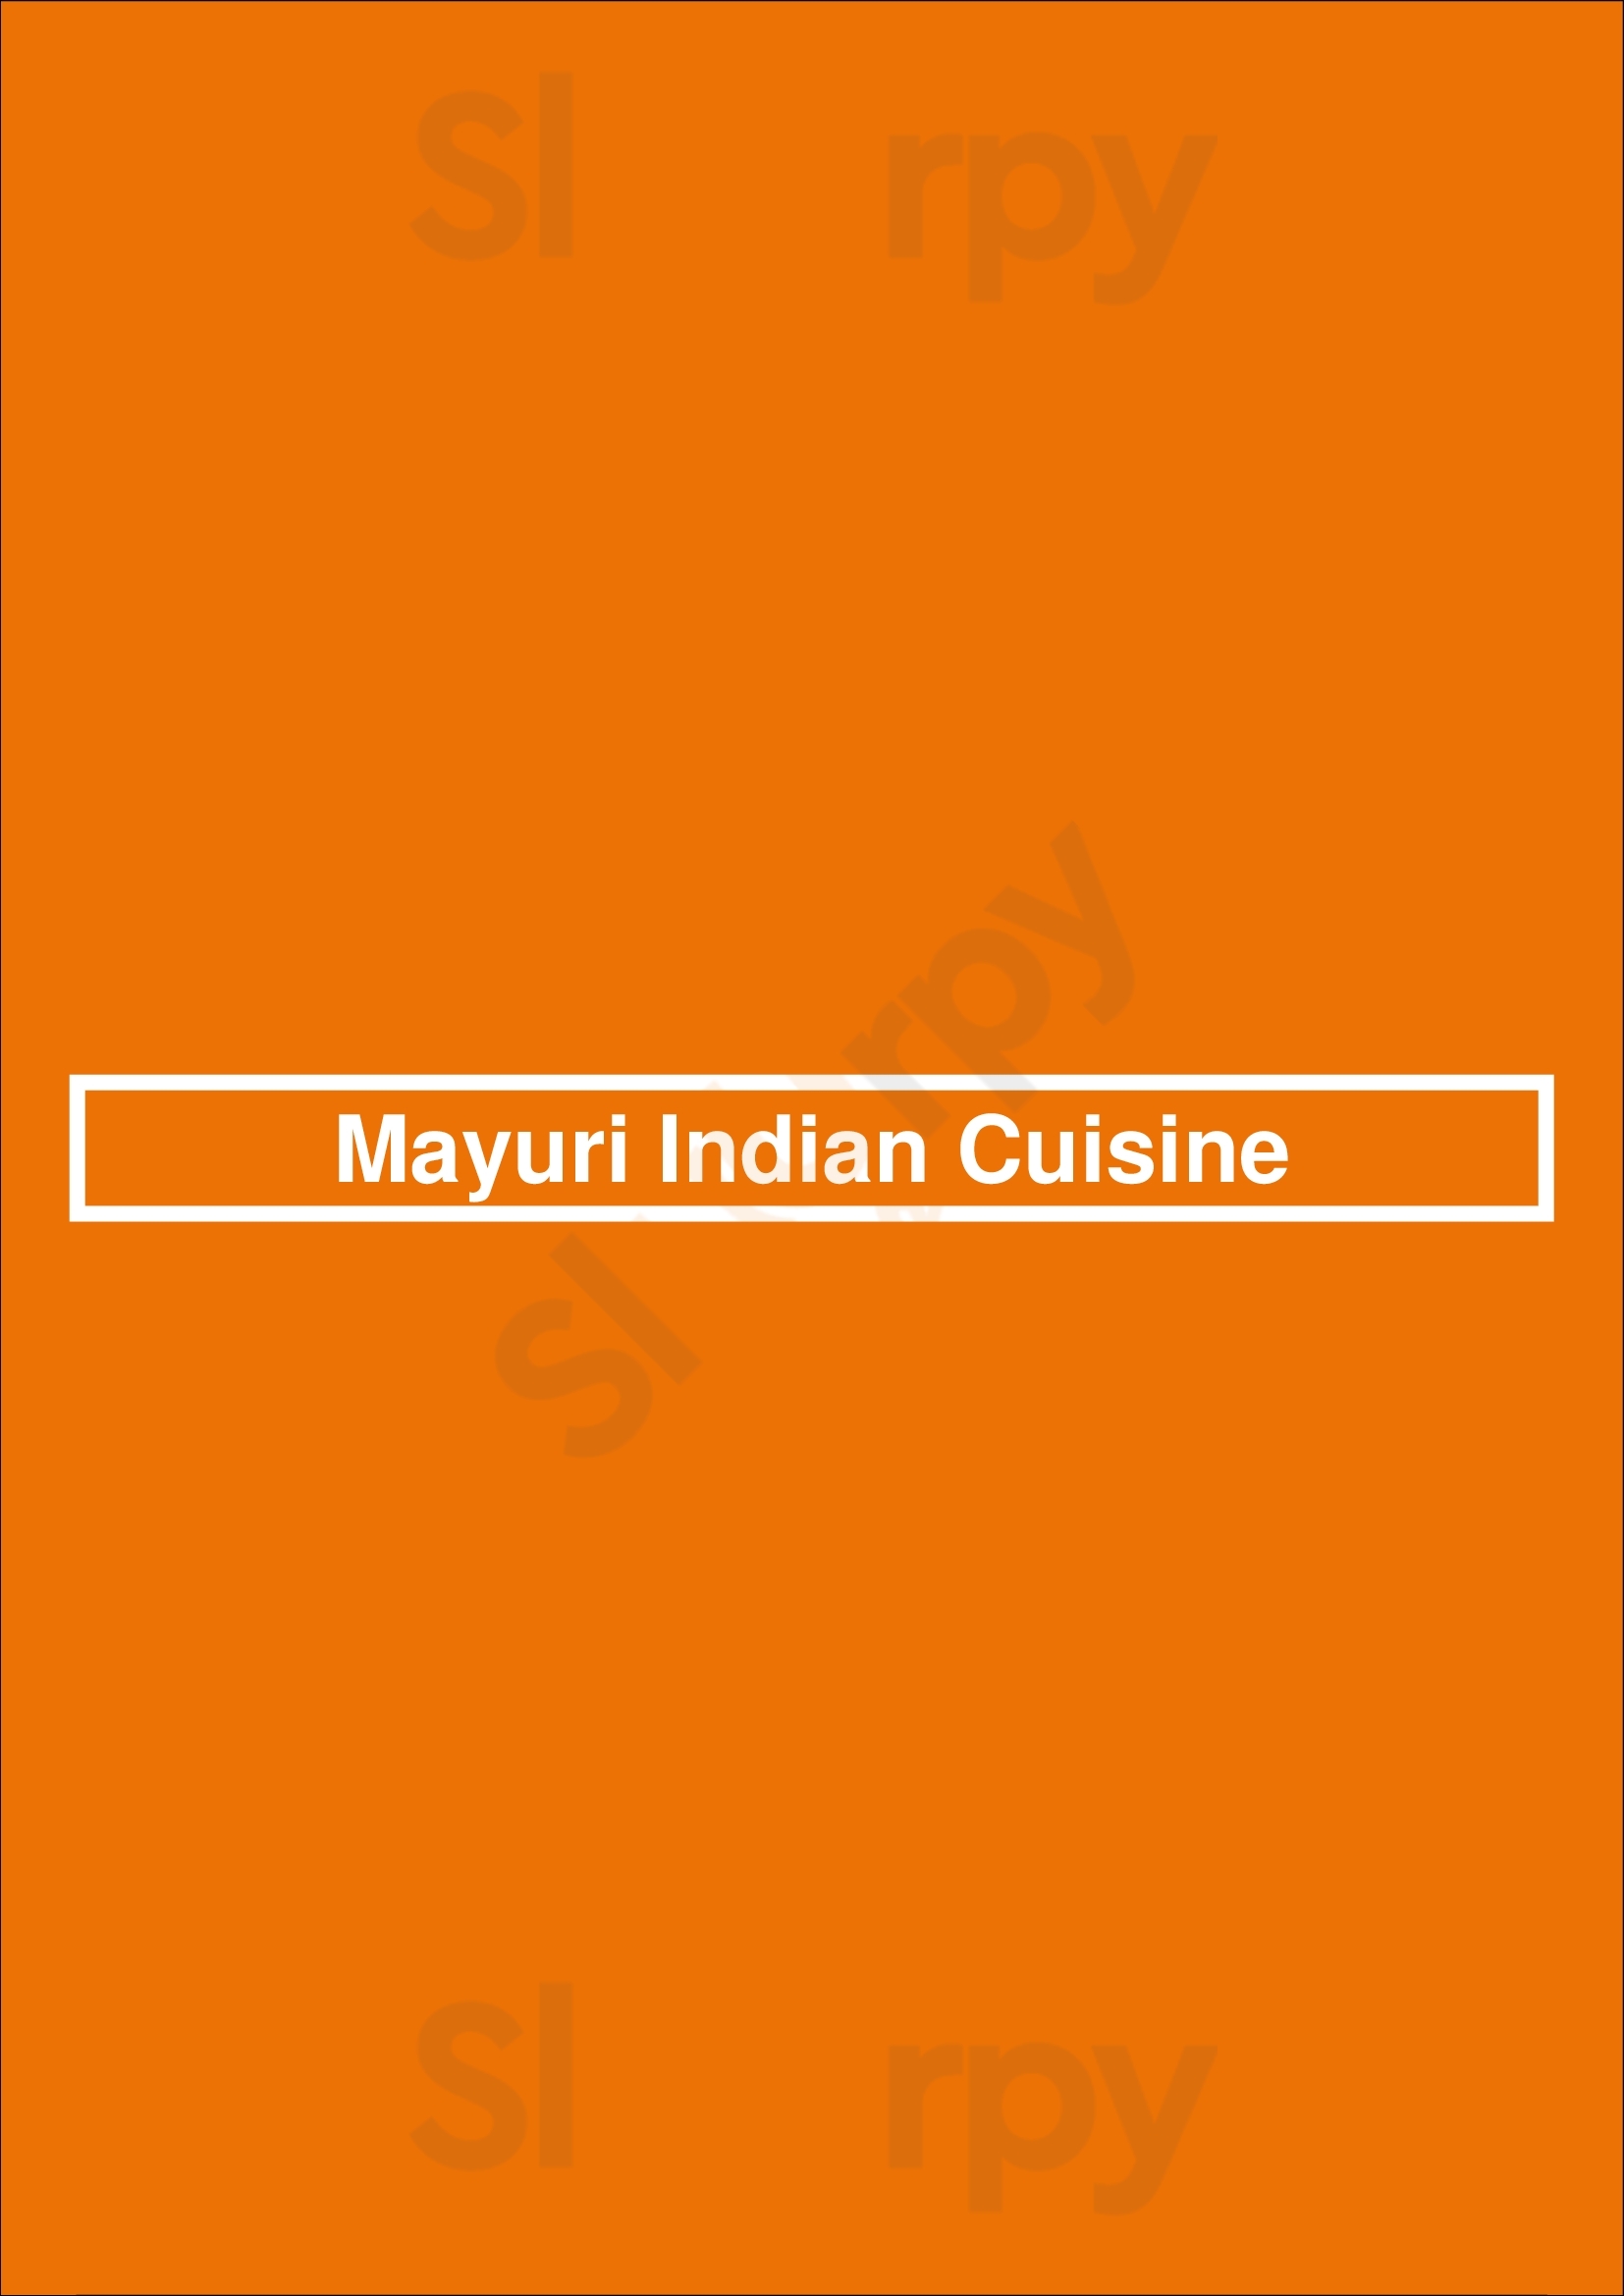 Mayuri Indian Cuisine Whitehall Menu - 1